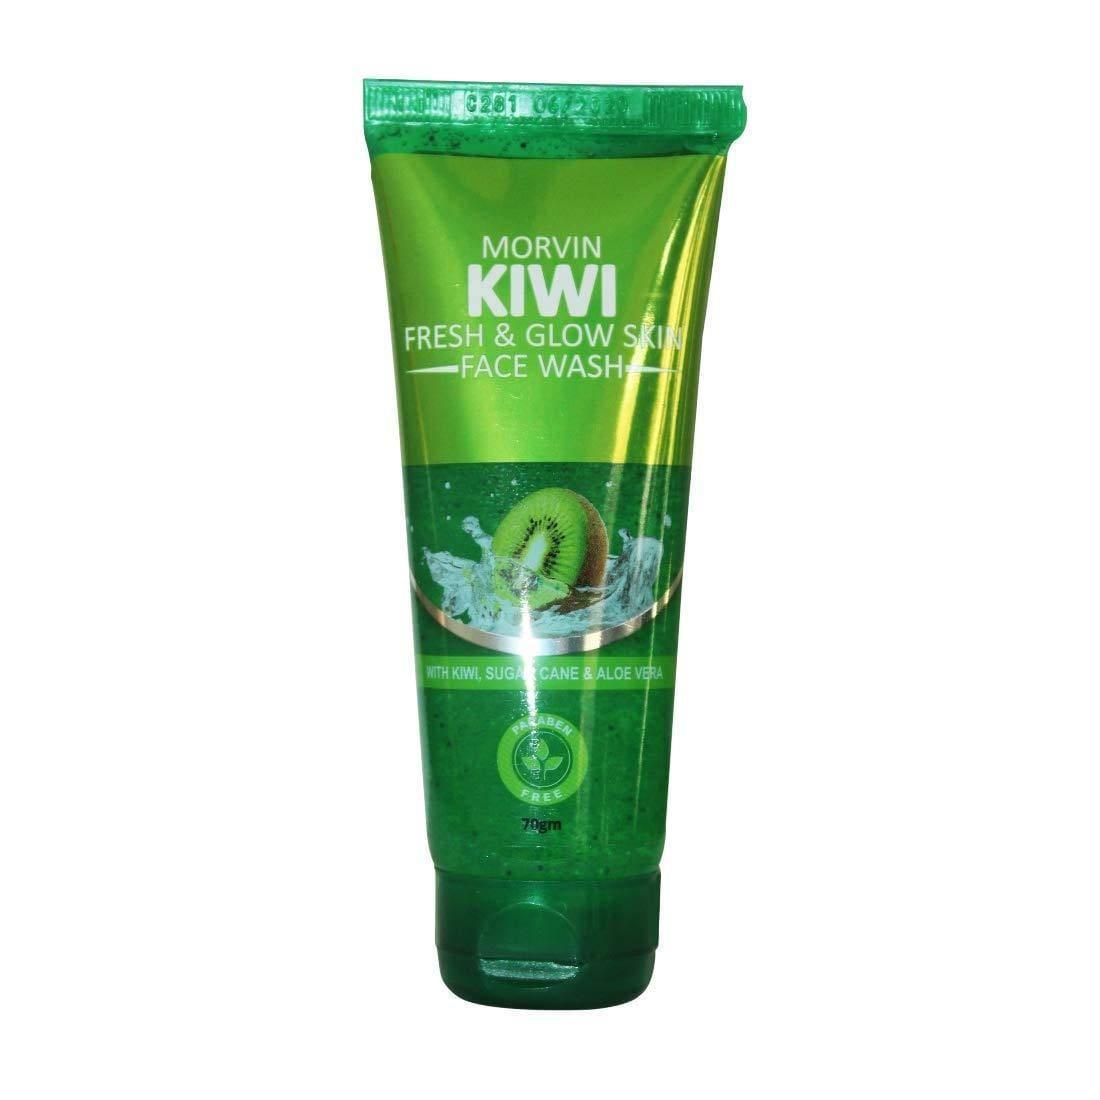 Morvin Kiwi Fresh & Glow Skin Face Wash 70gm-Pack Of 2-Health & Personal Care-dealsplant